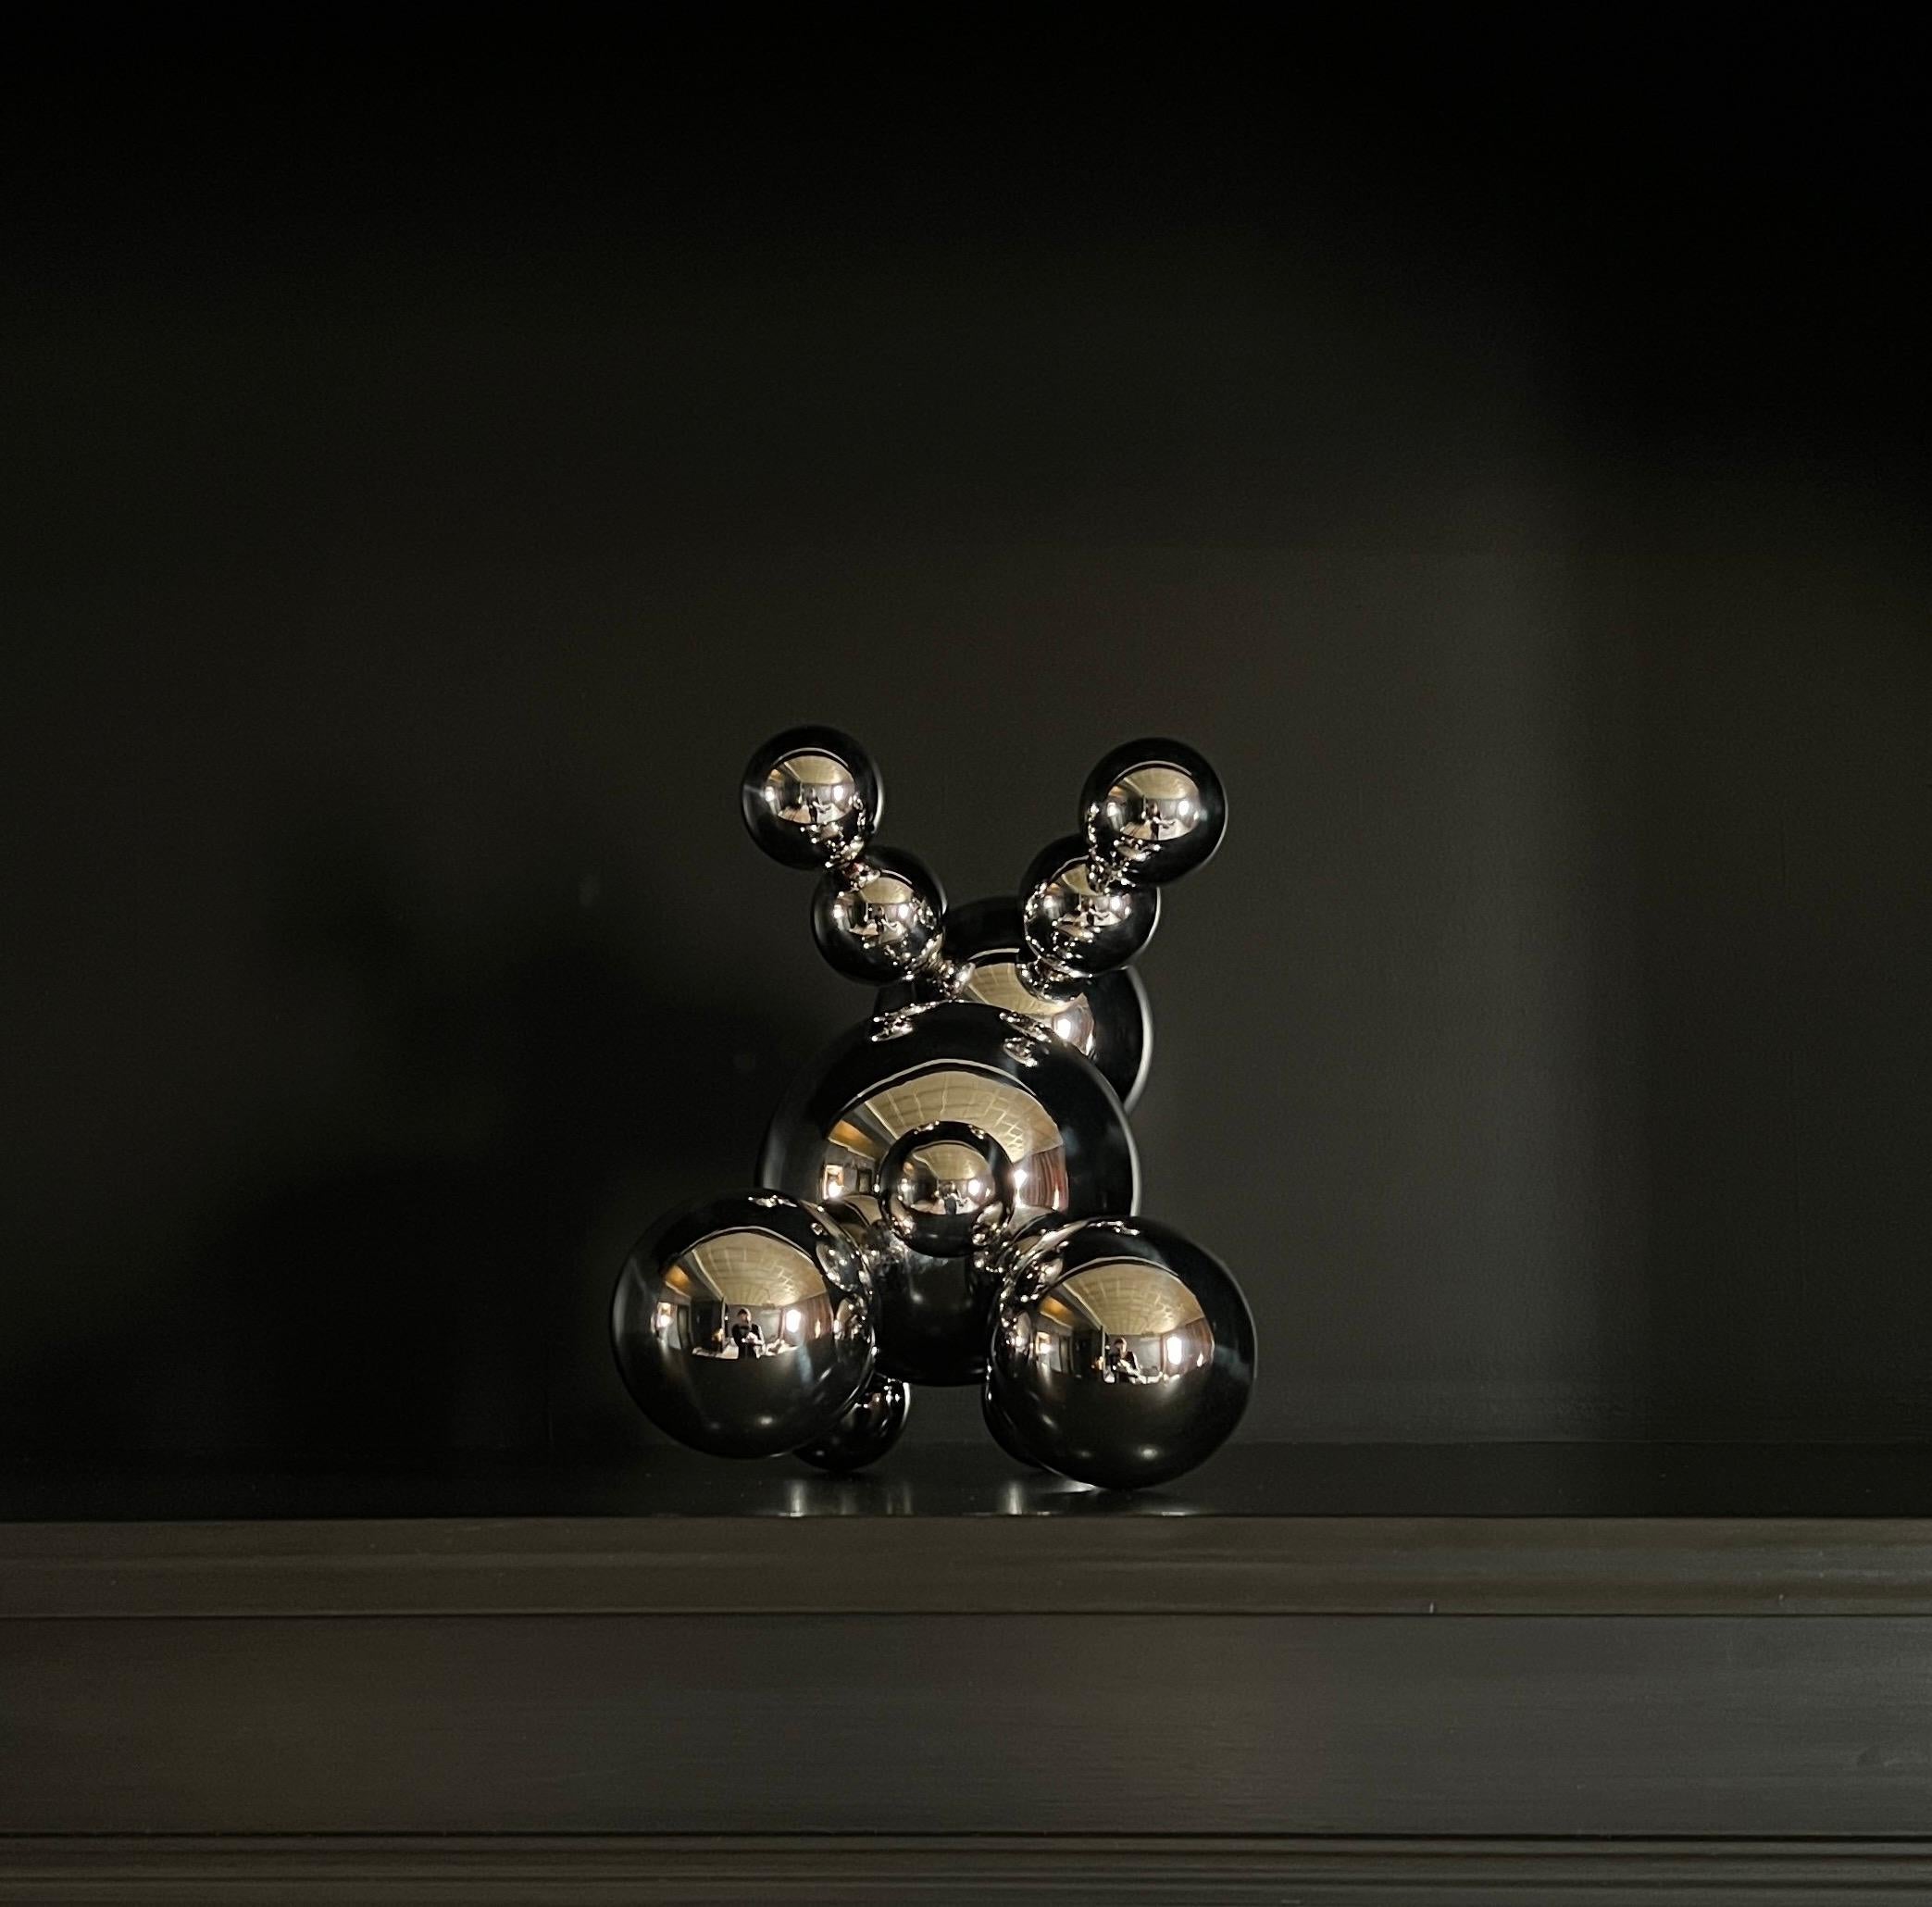 Stainless Steel Rabbit Bunny Robot 'Ross' Minimalistic Art 9